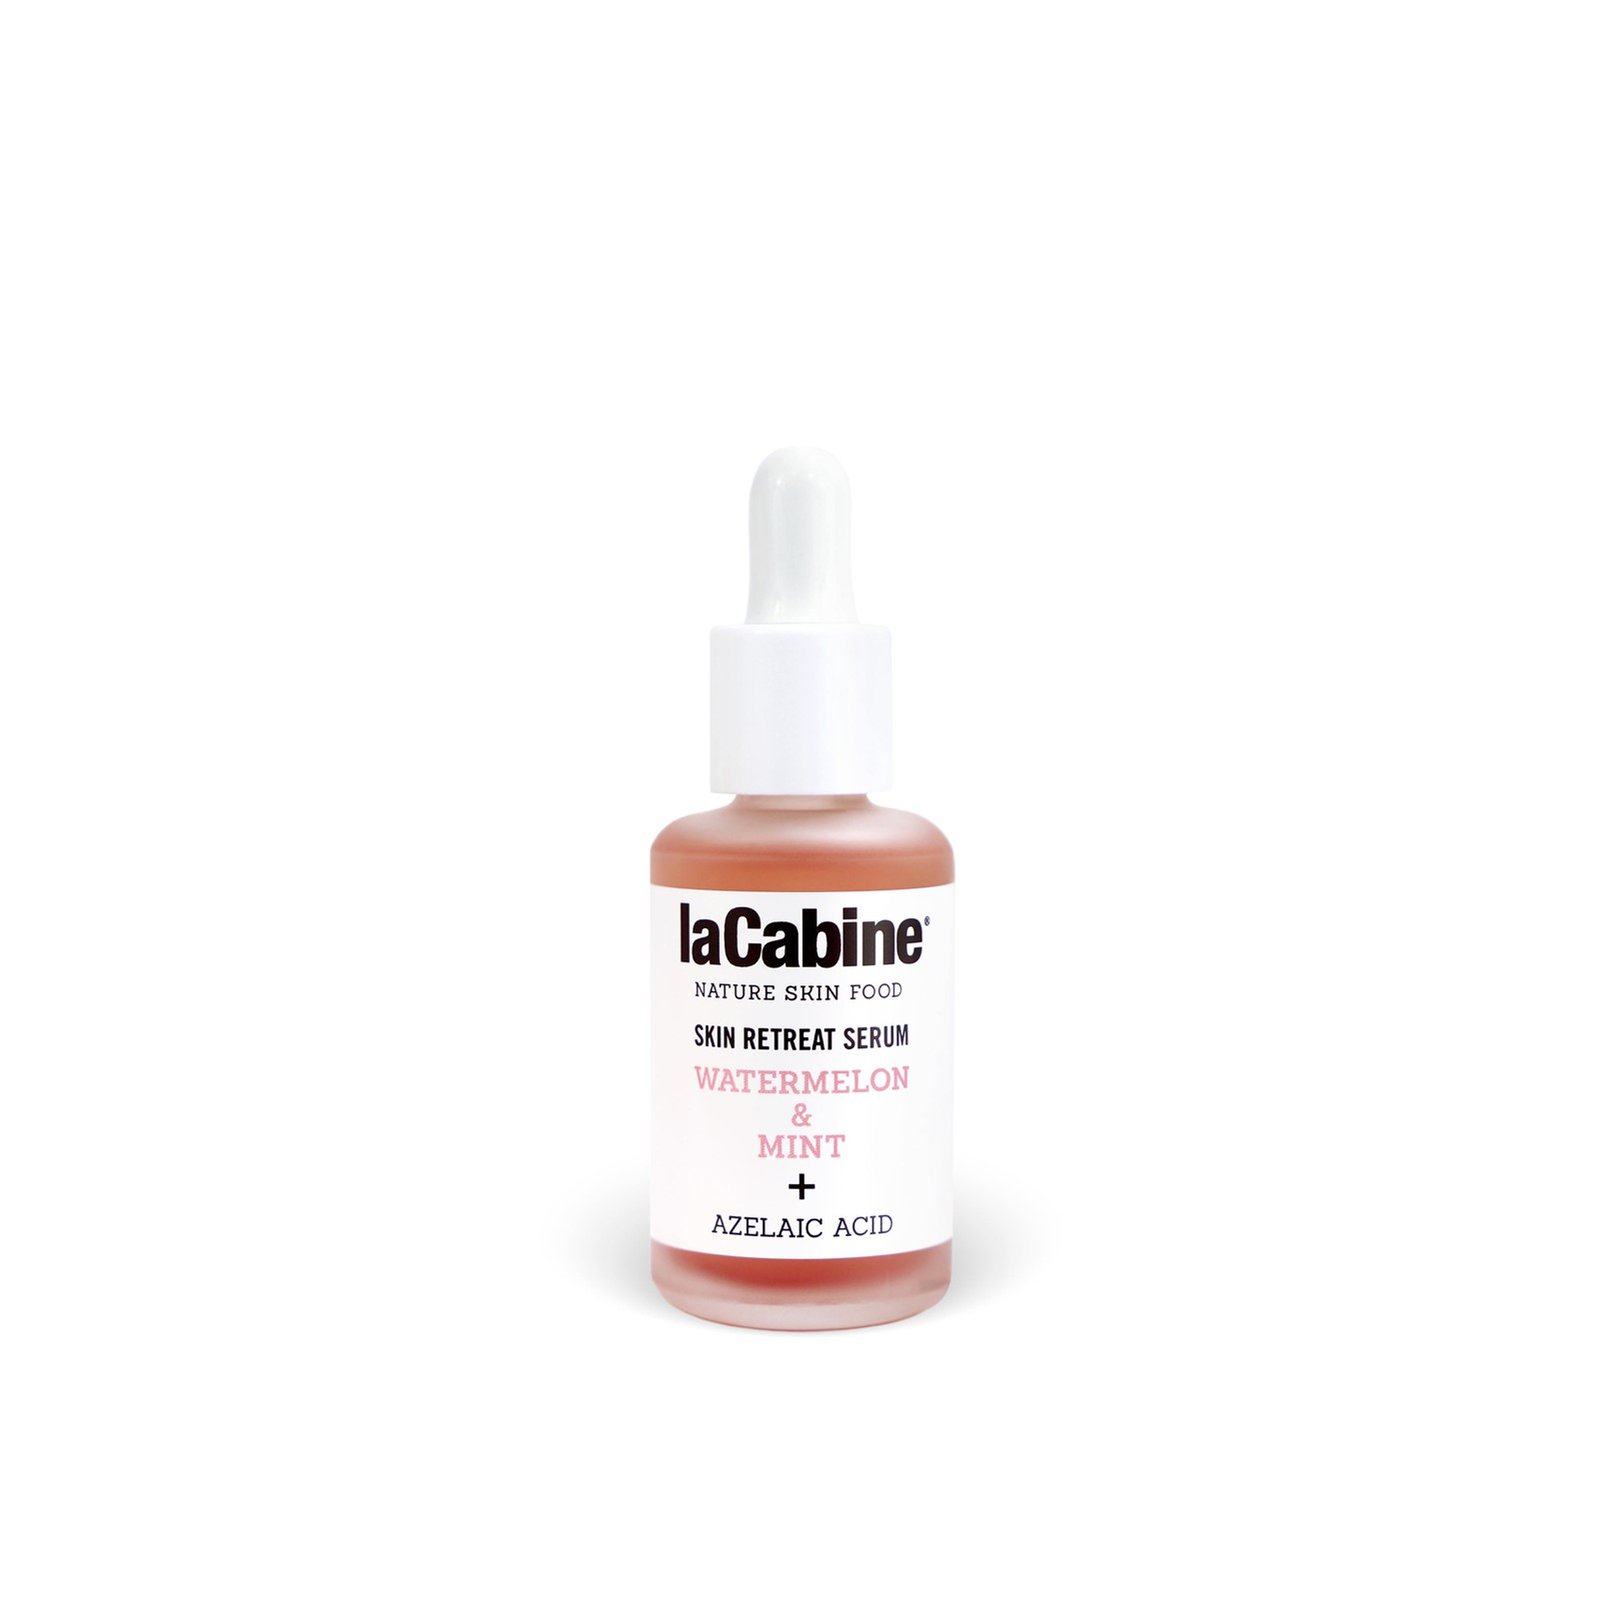 La Cabine Nature Skin Food Skin Retreat Serum 30ml